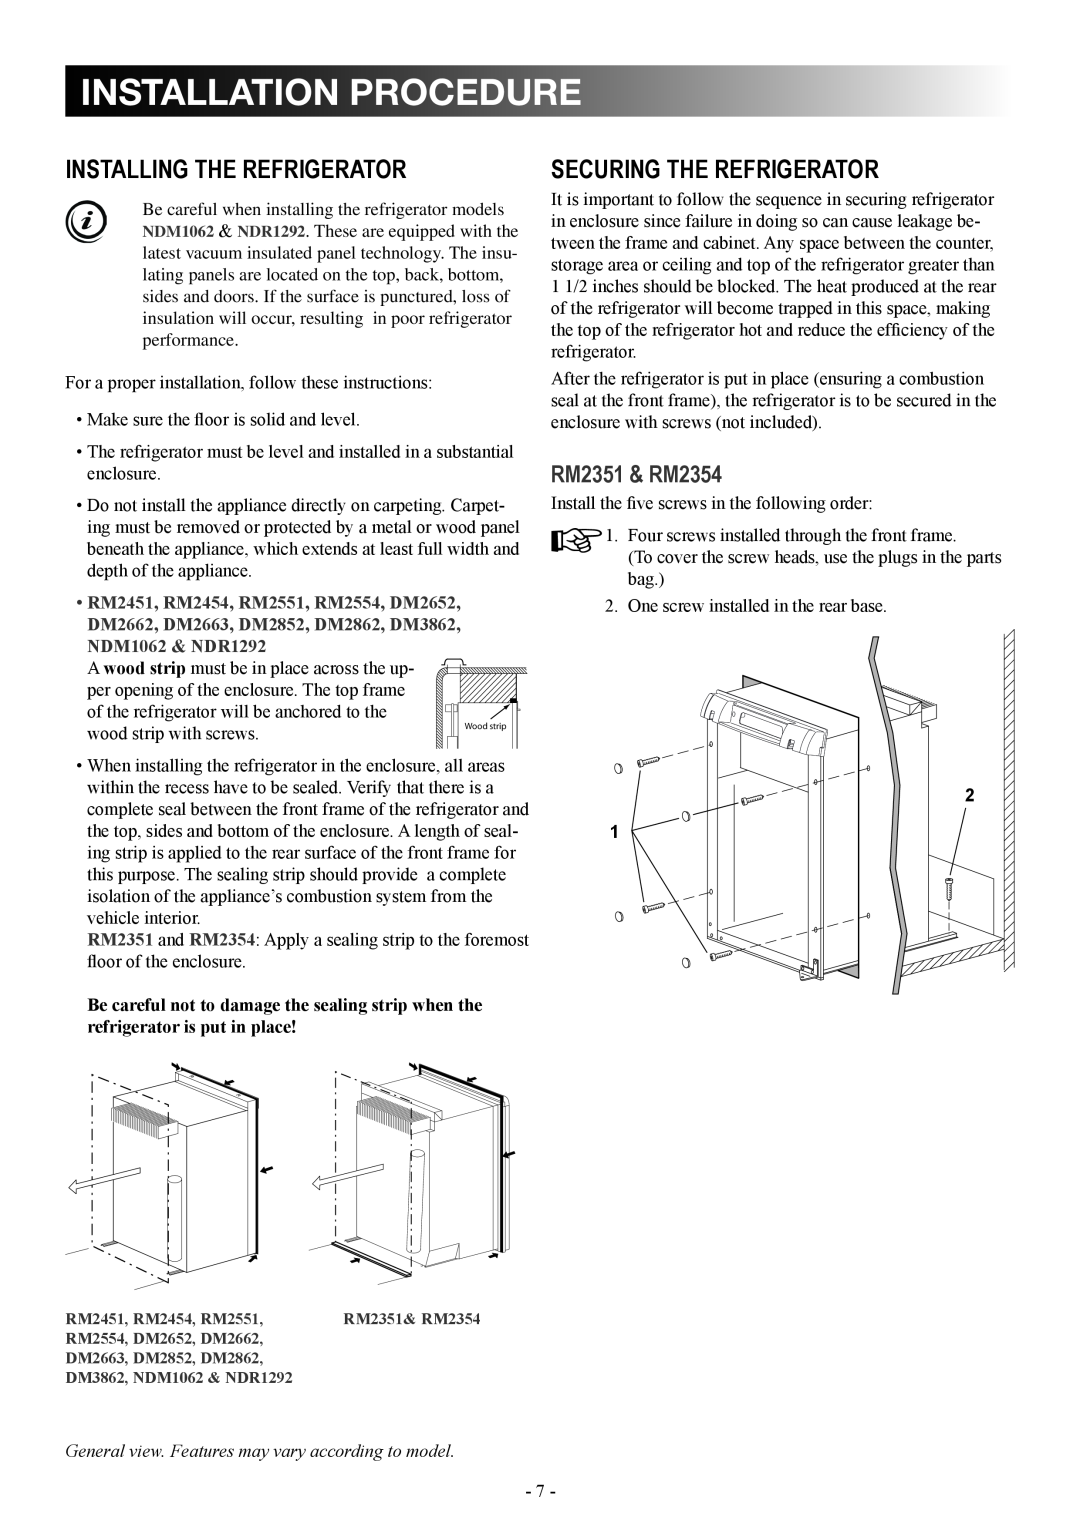 Dometic DM2862 manual installation procedure, Installing the refrigerator, Securing the refrigerator, RM2351 & RM2354 